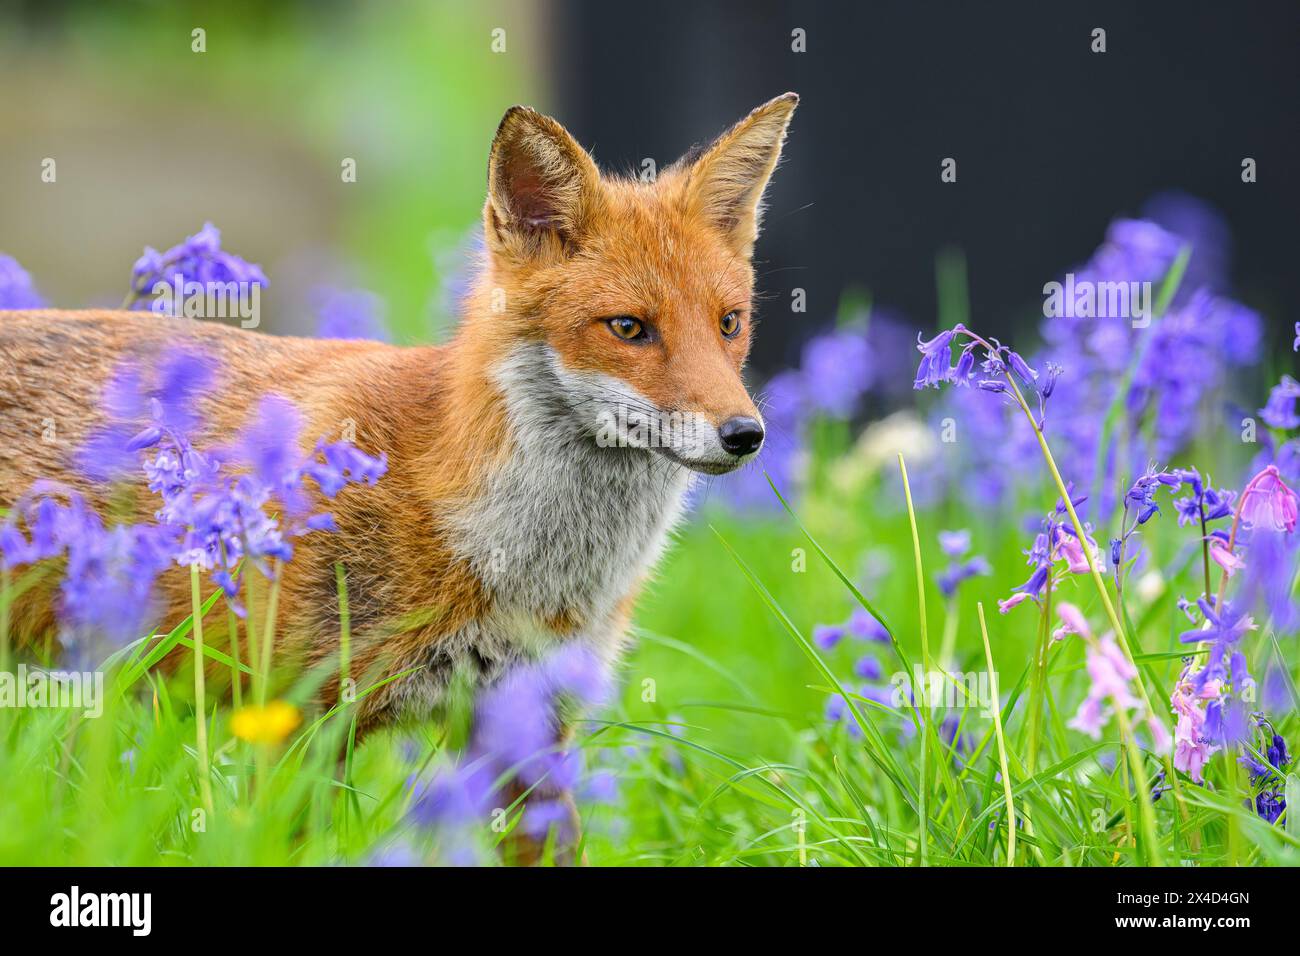 Fox stood in flowers Stock Photo